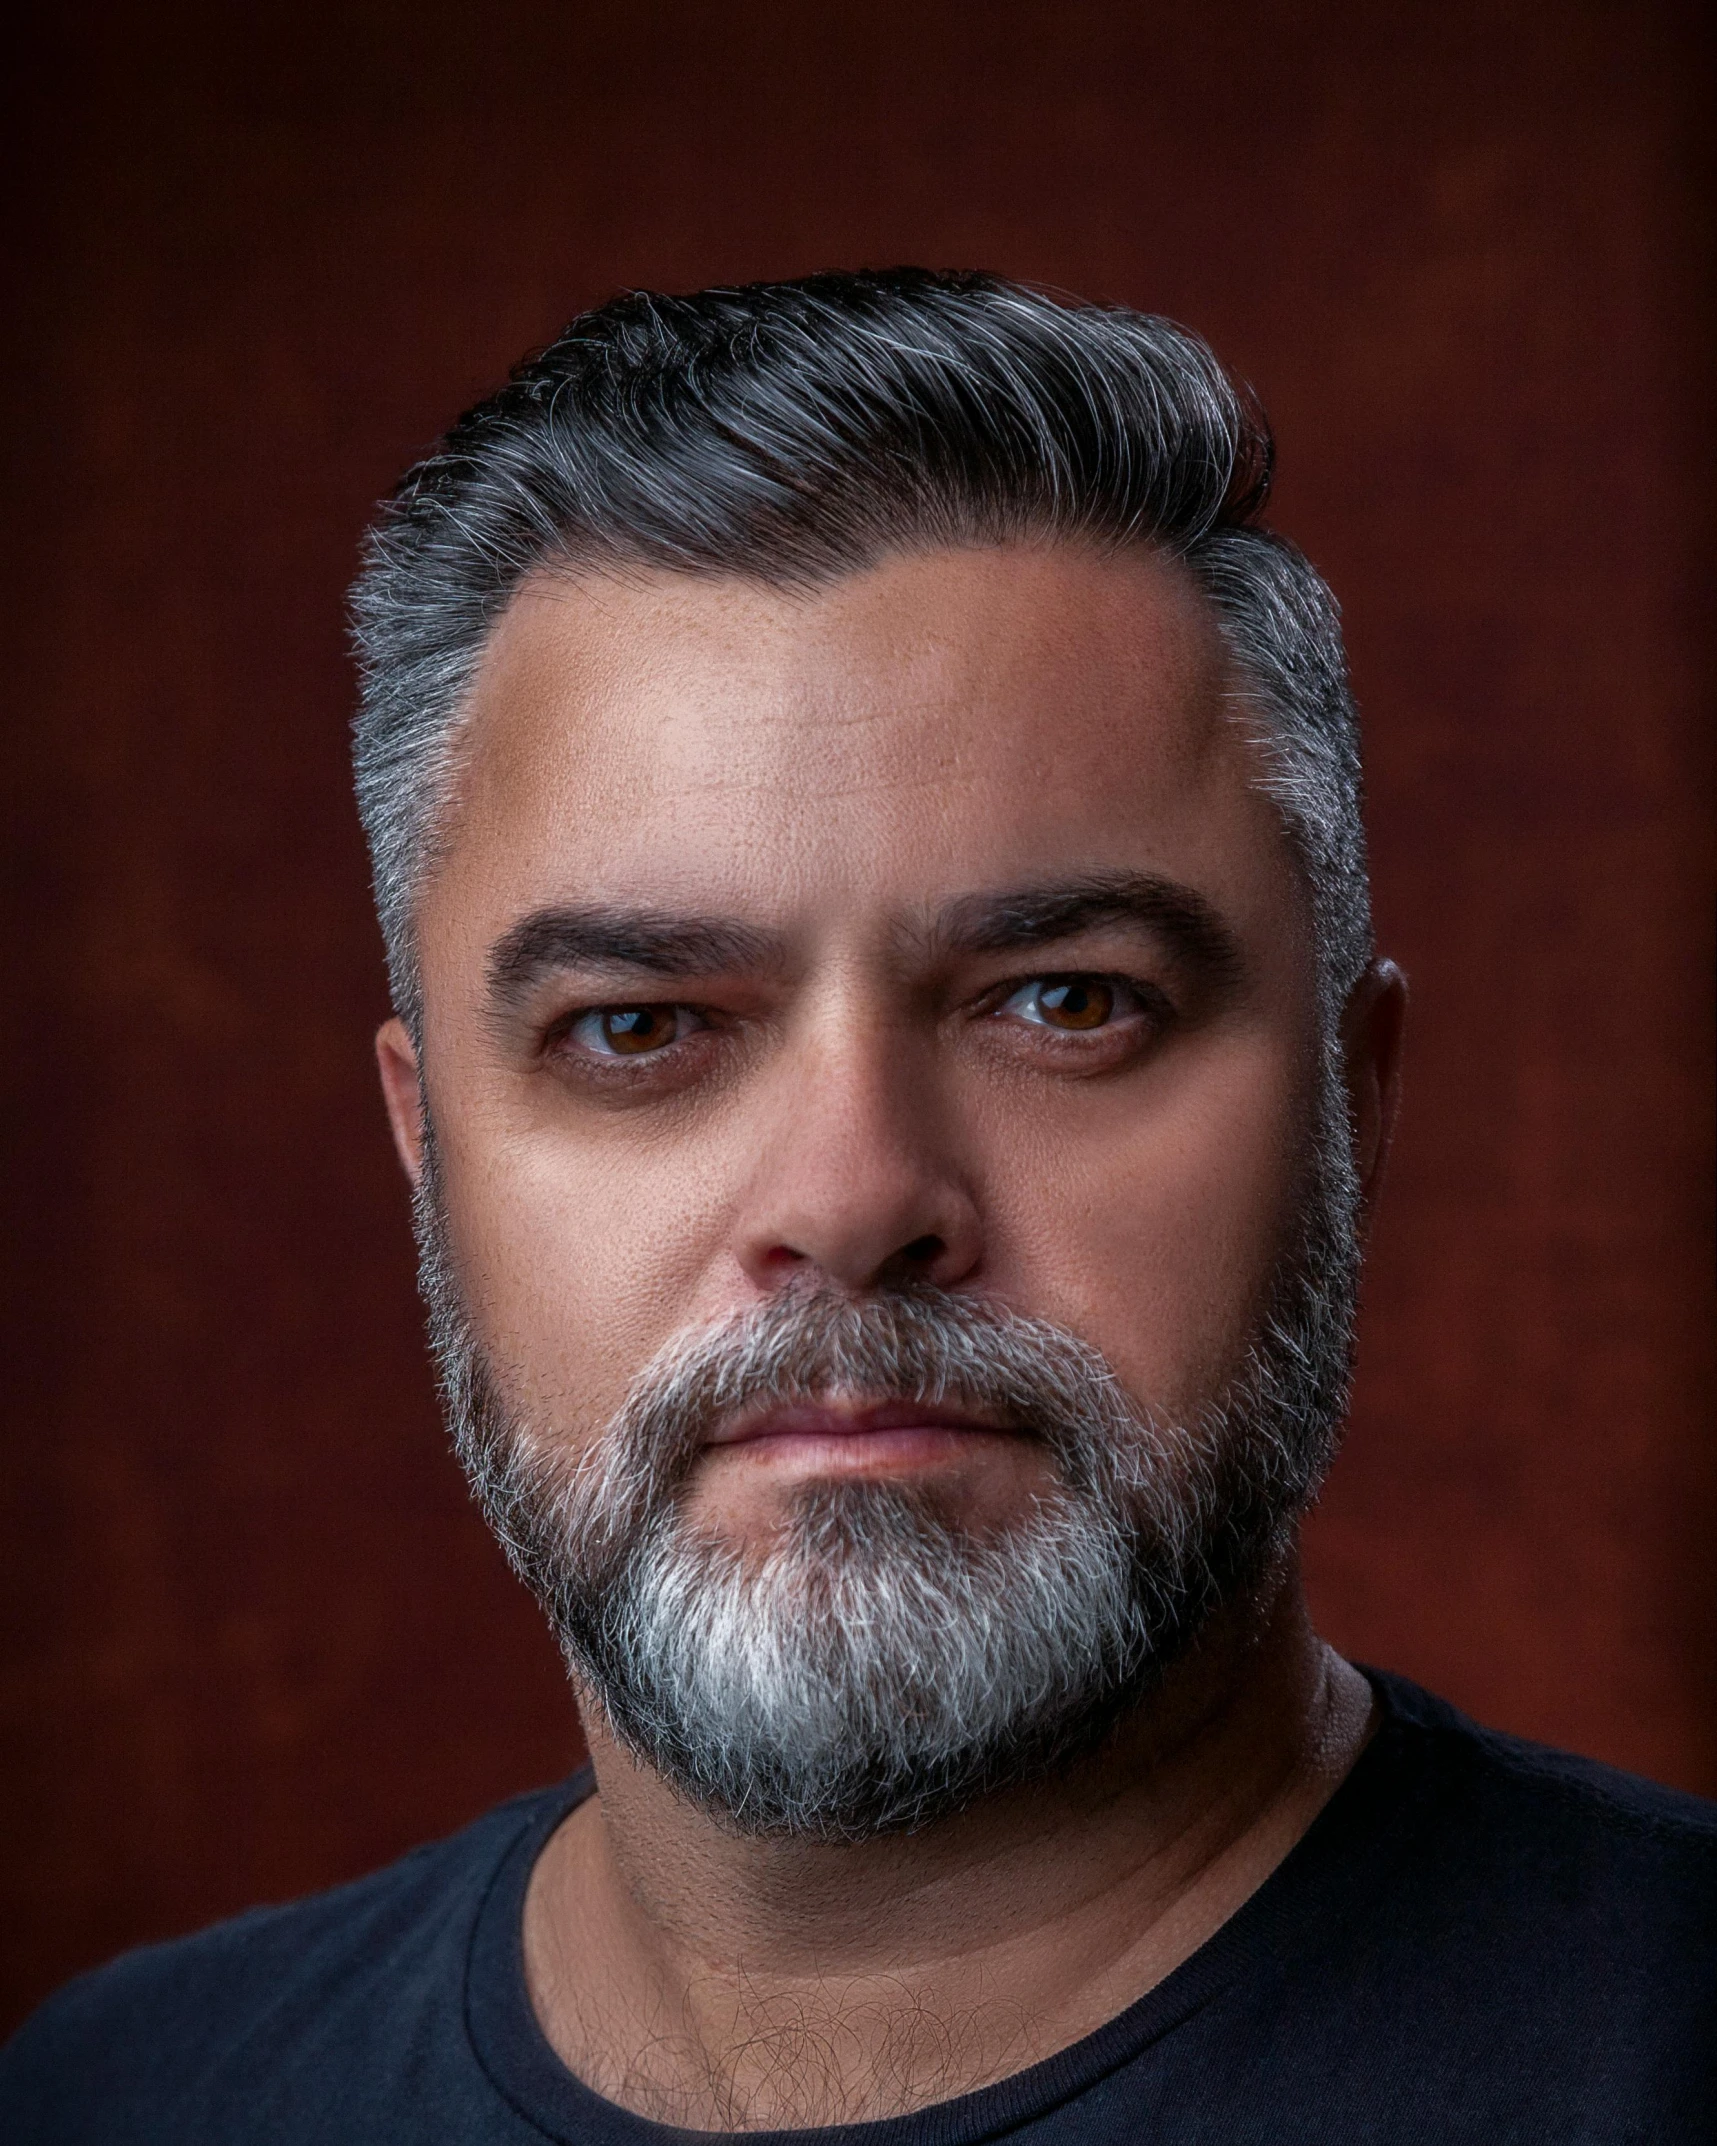 man with grey hair and beard and black shirt